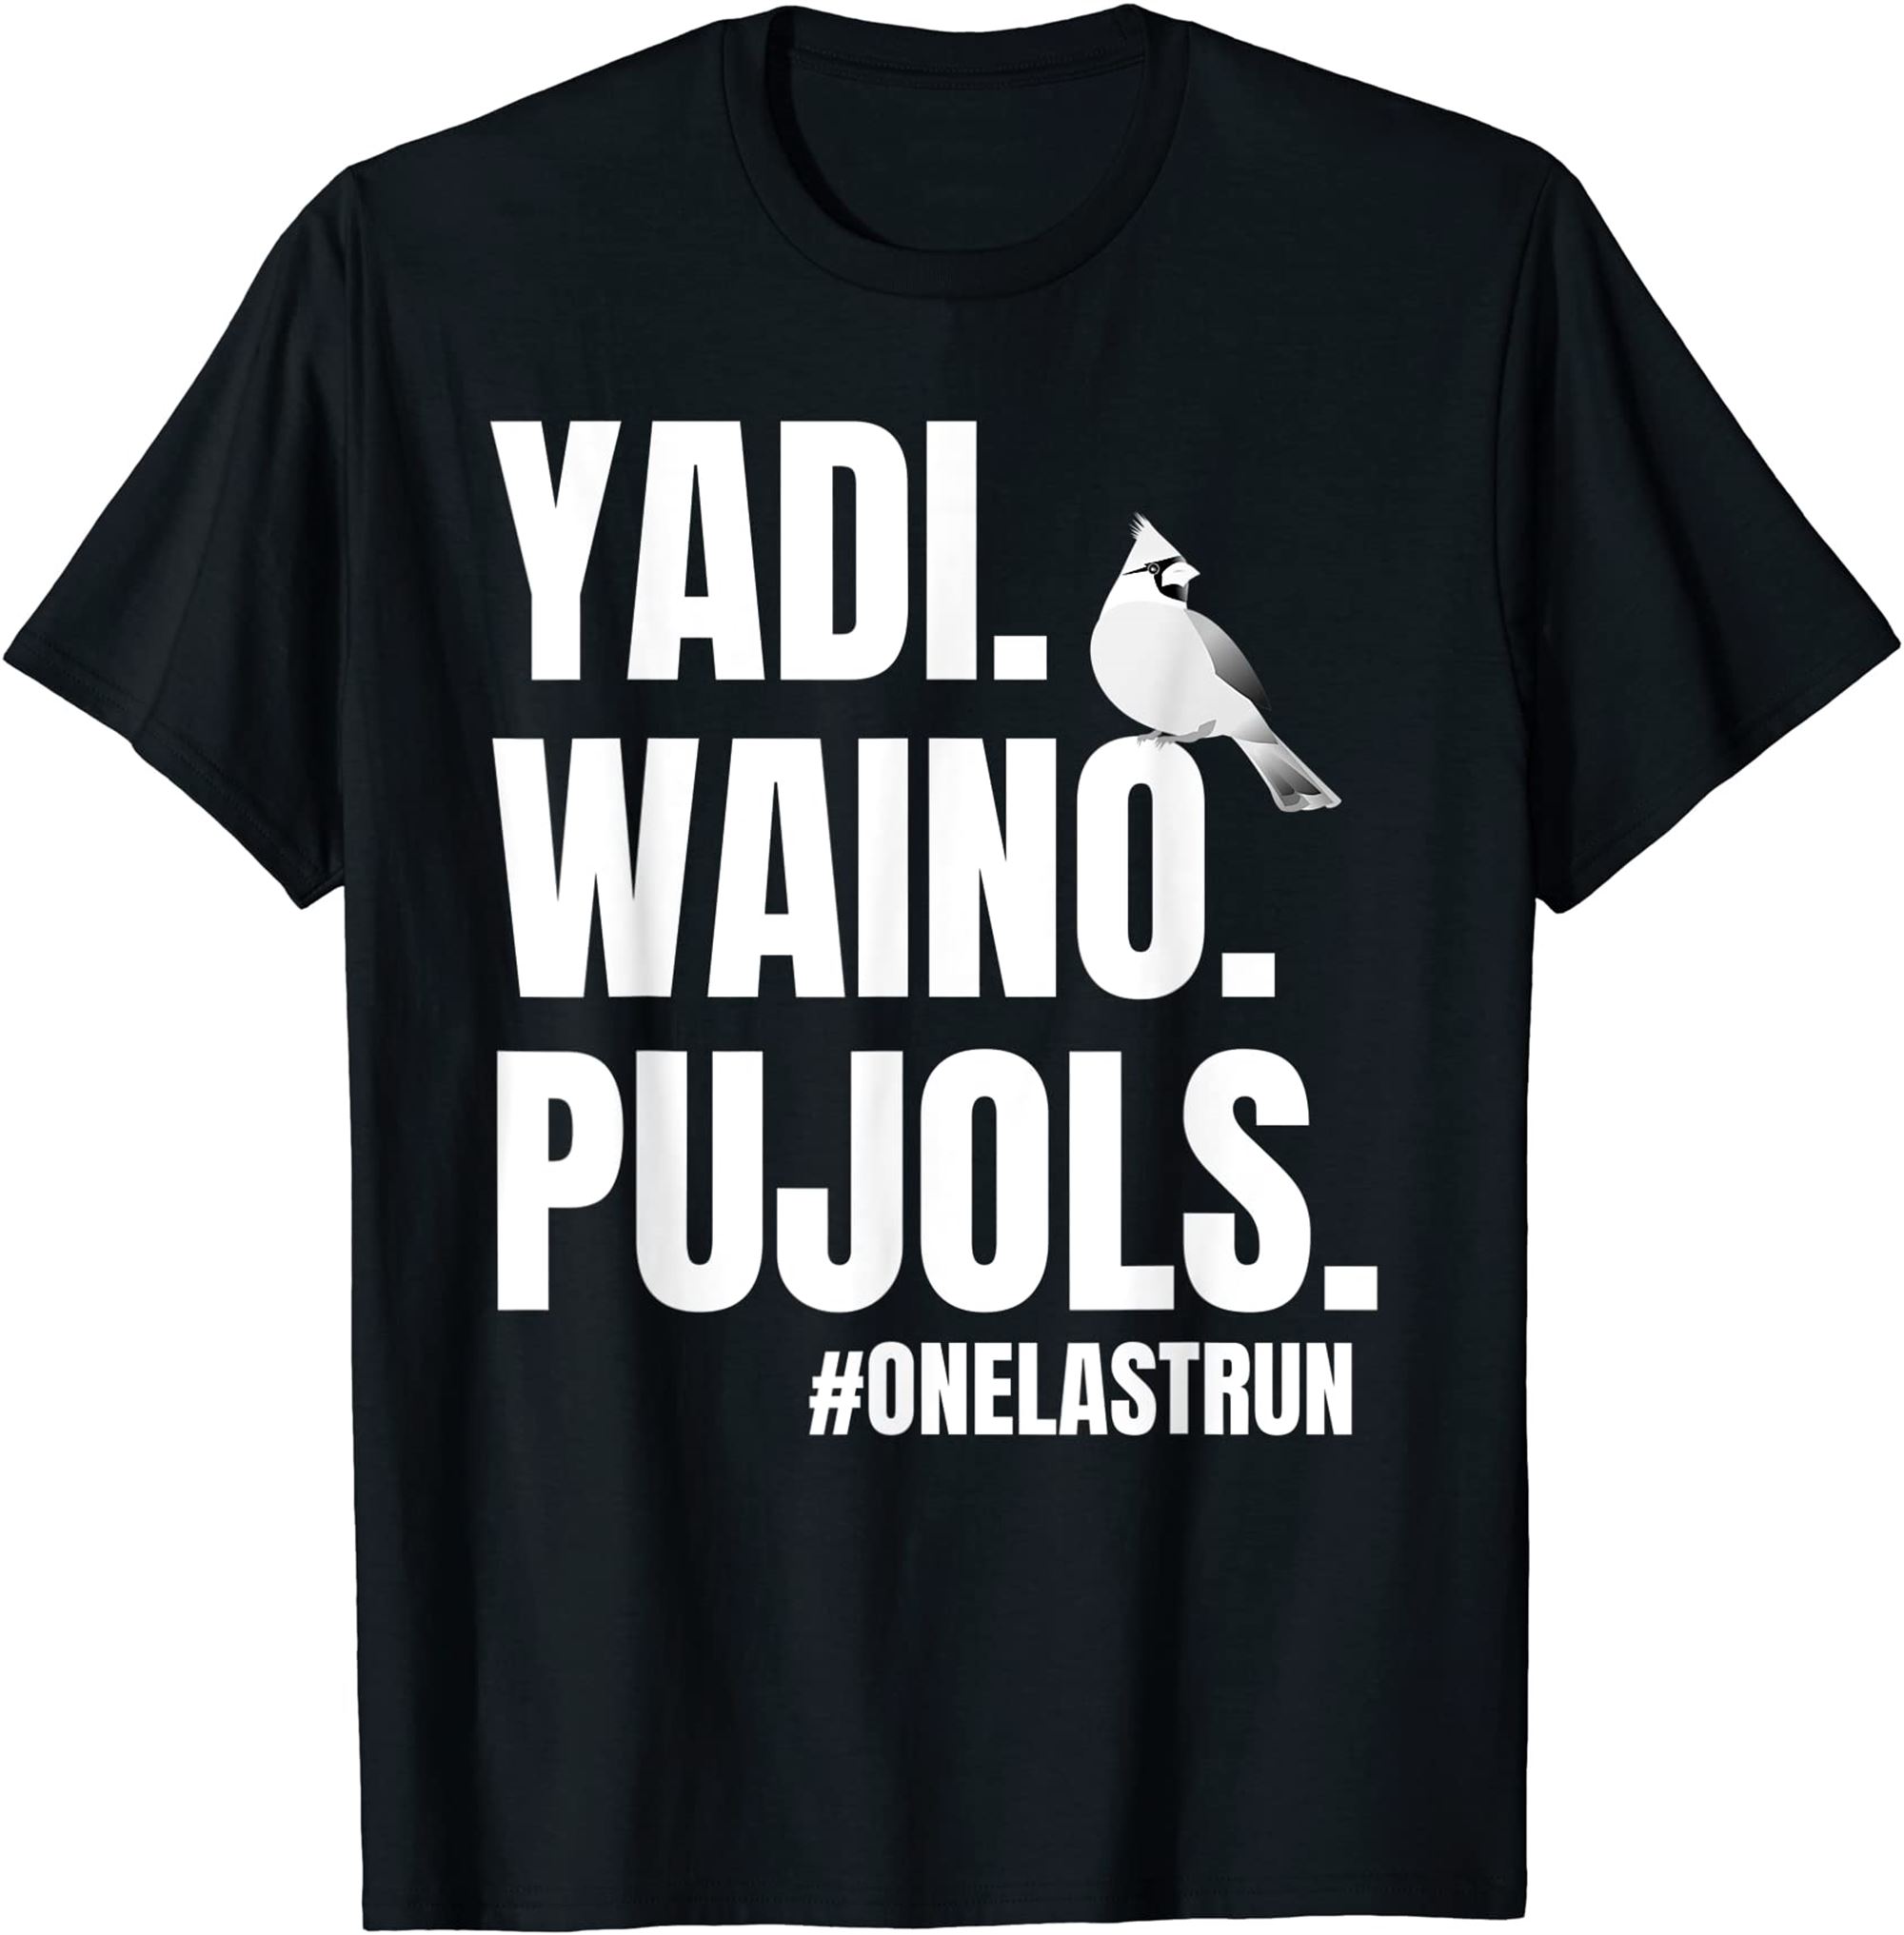 Yadi Waino Pujols T-shirt Full Size Up To 5xl